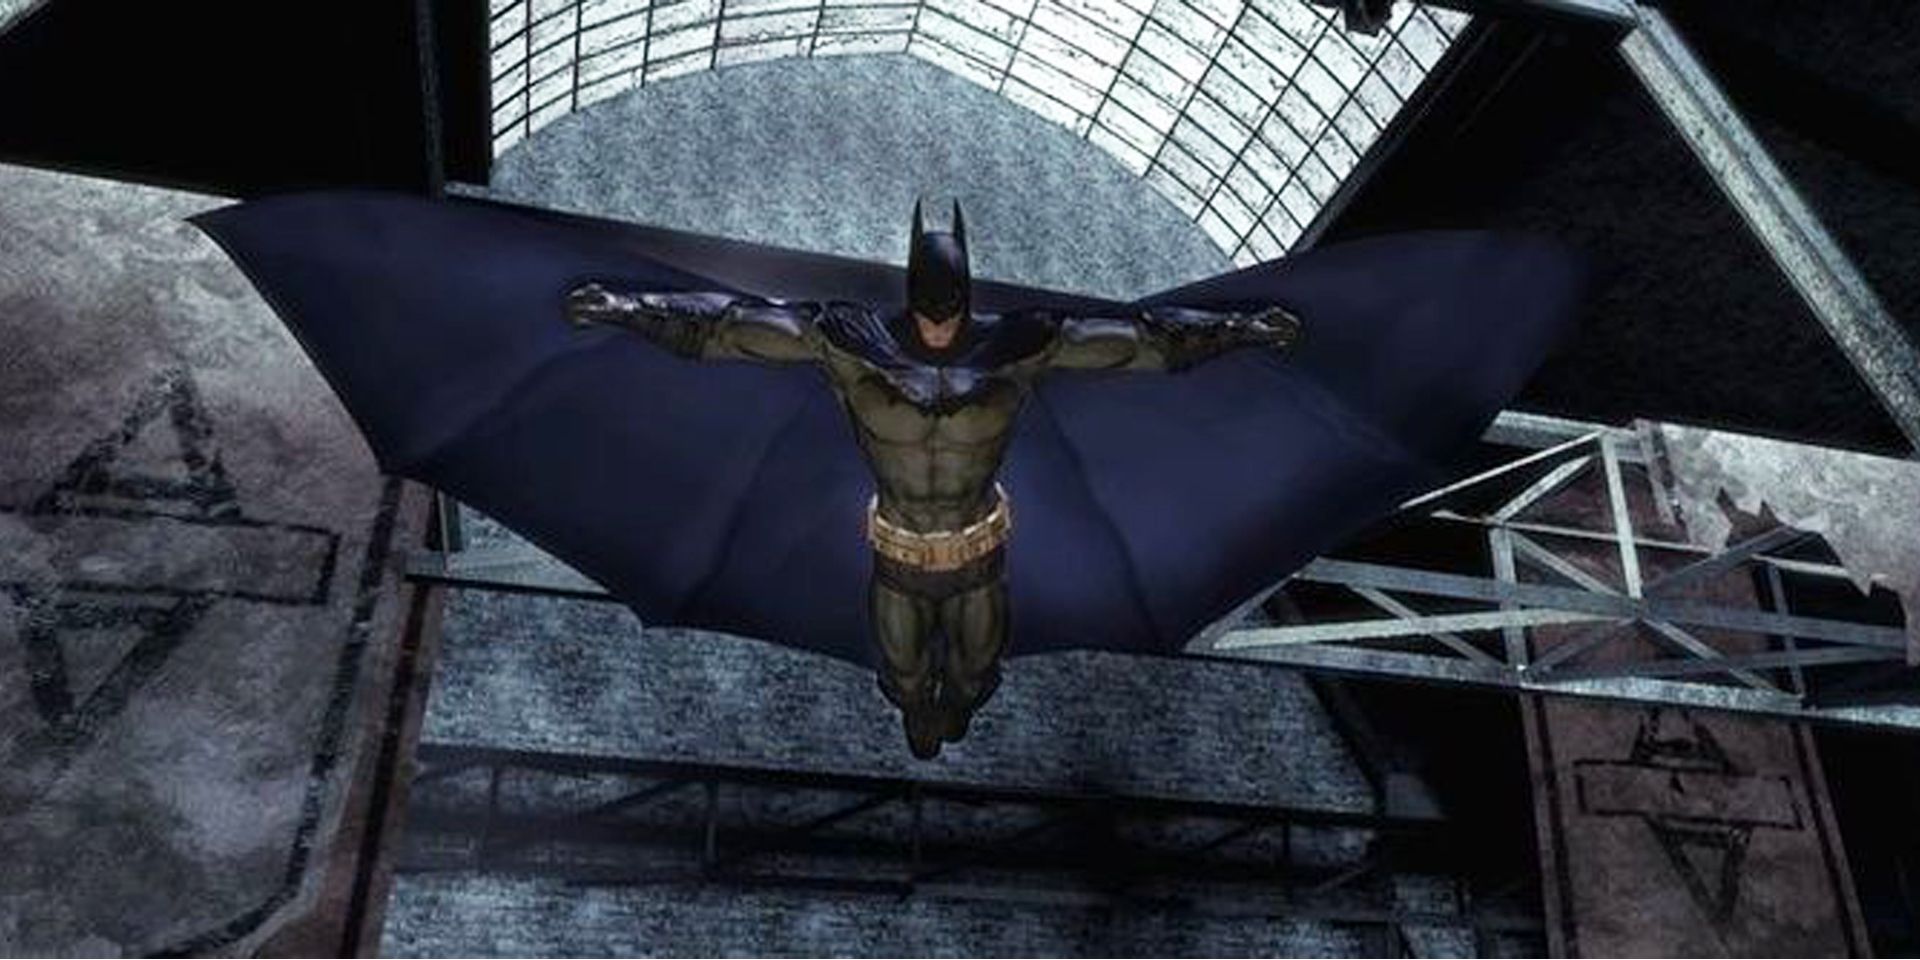 Batman glides across a room in the asylum in Batman Arkham Asylum.